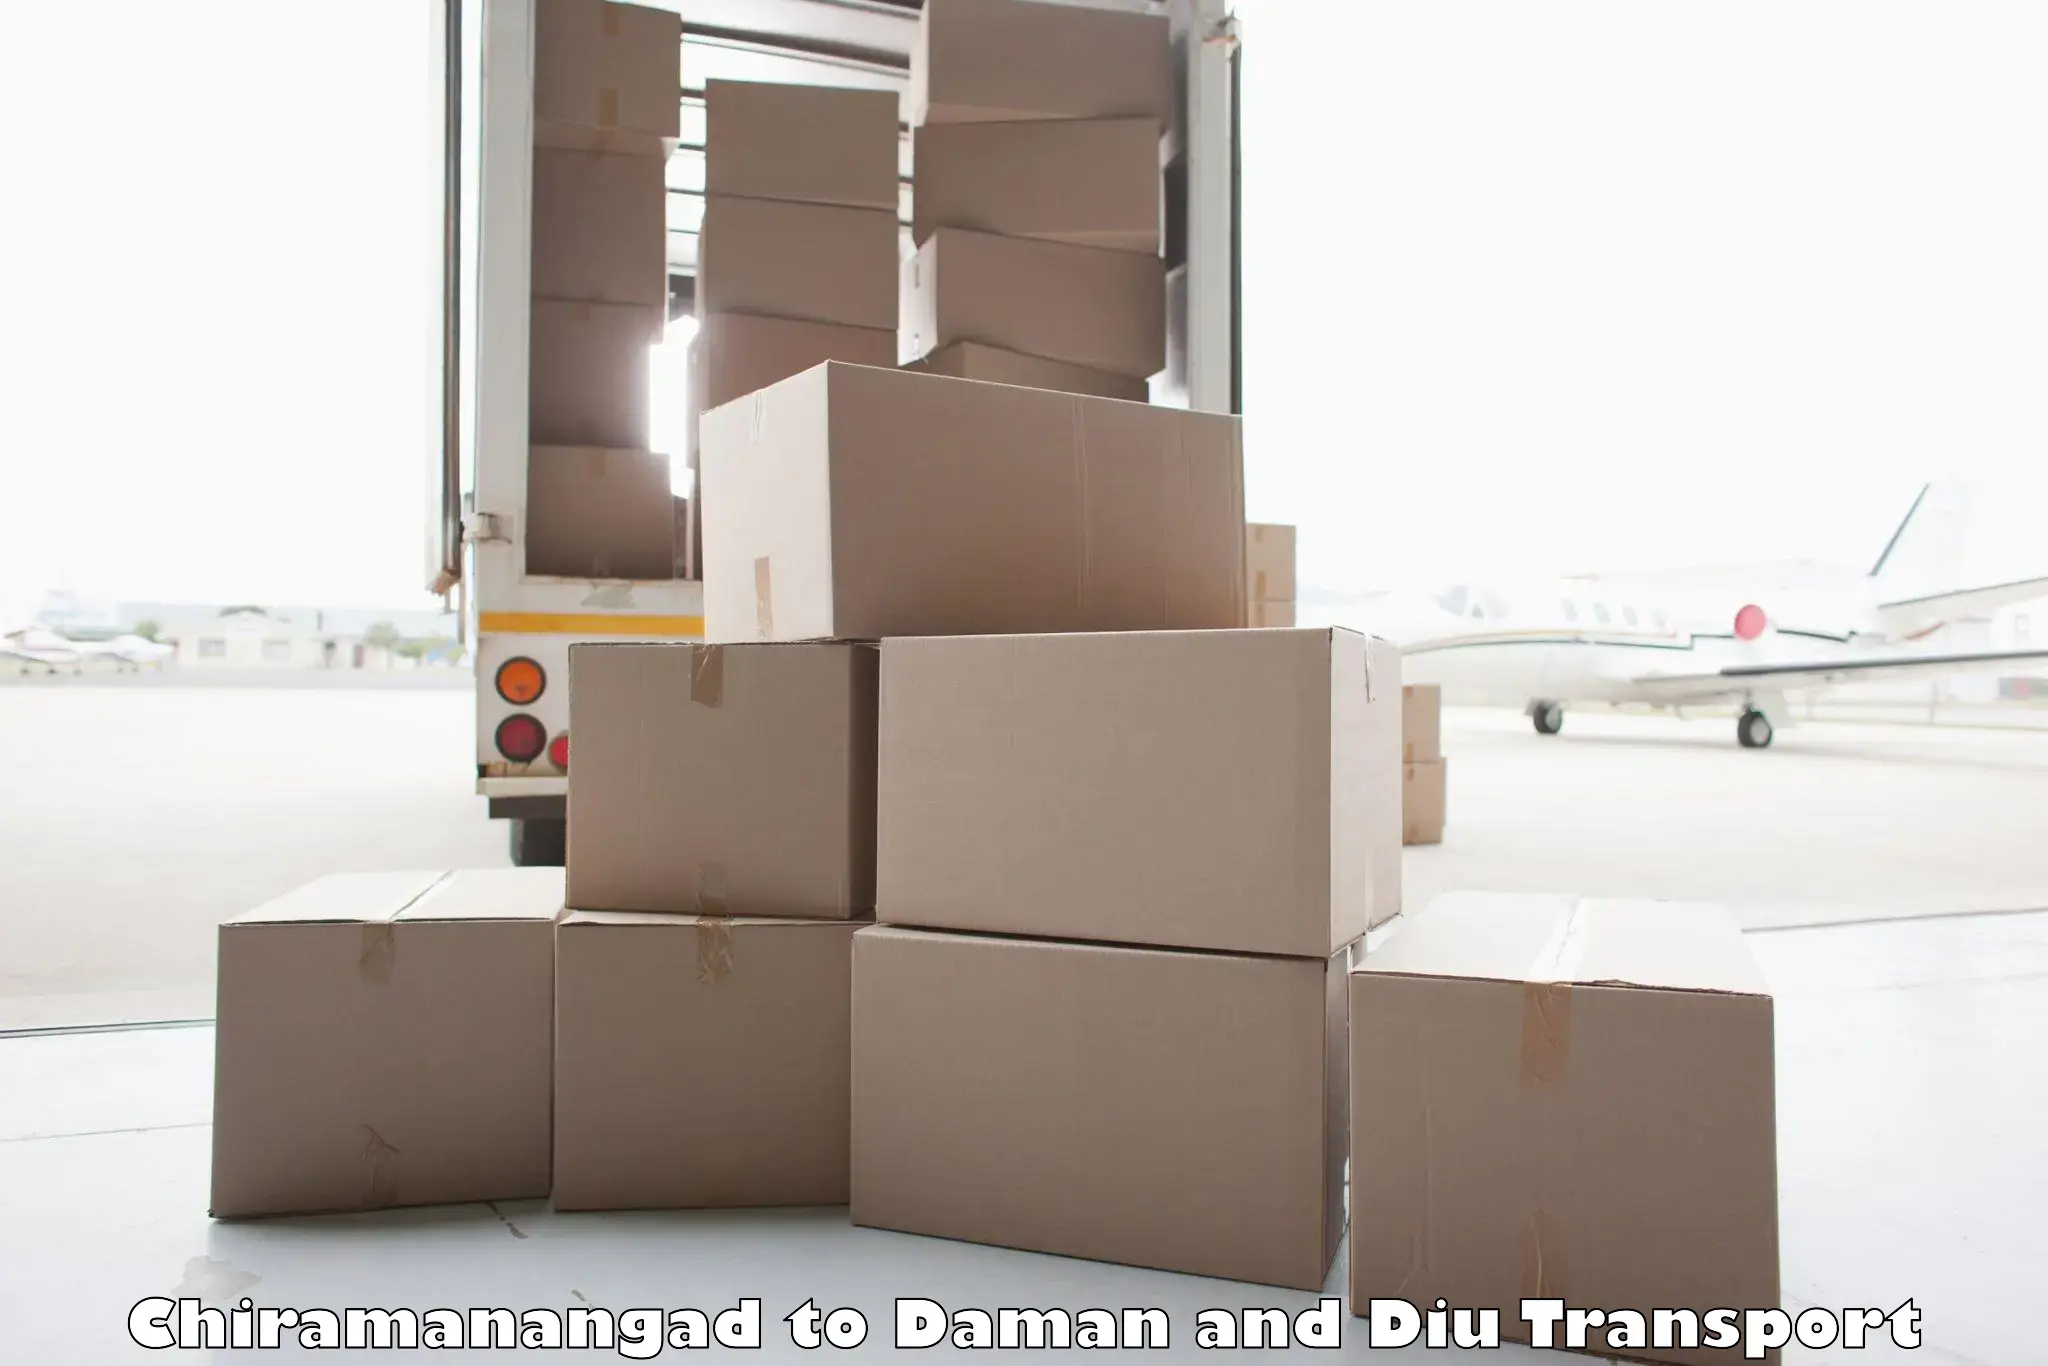 Road transport online services Chiramanangad to Daman